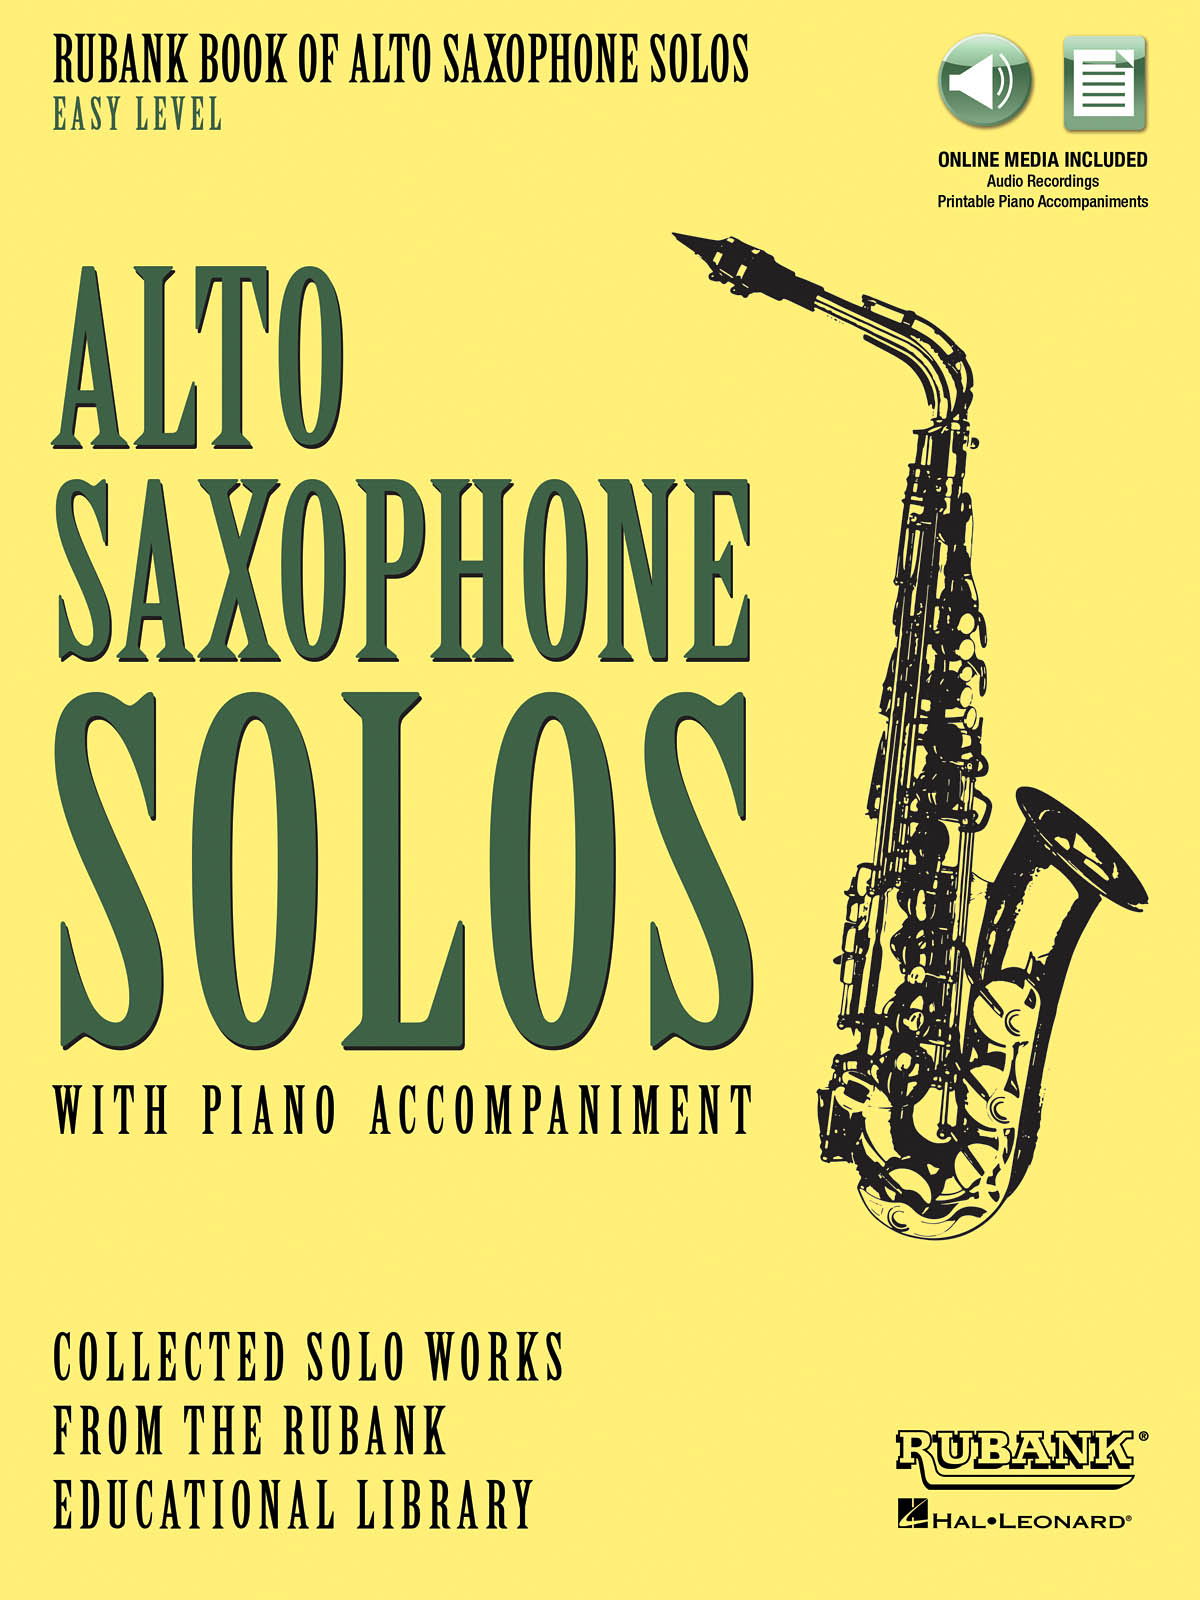 Rubank Book of Alto Saxophone Solos - Easy Level - with Piano Accompaniment